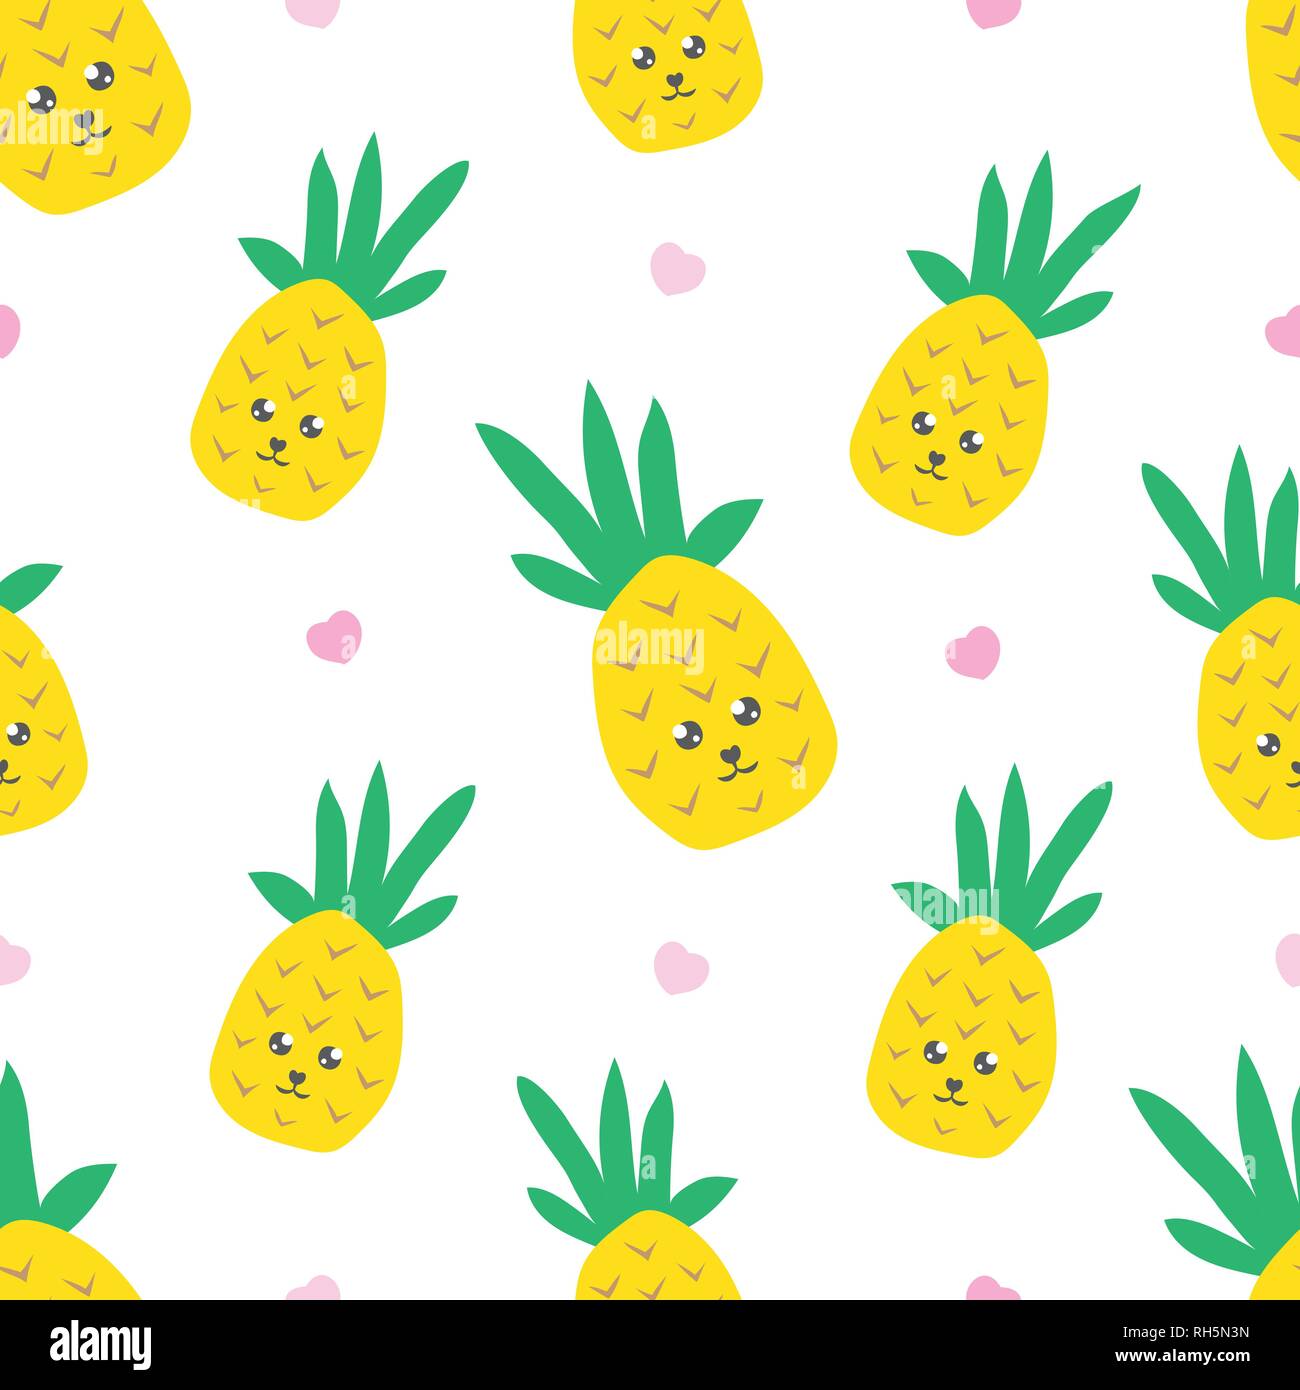 Childish Seamless Pattern With Cute Kawaii Pineapple Creative